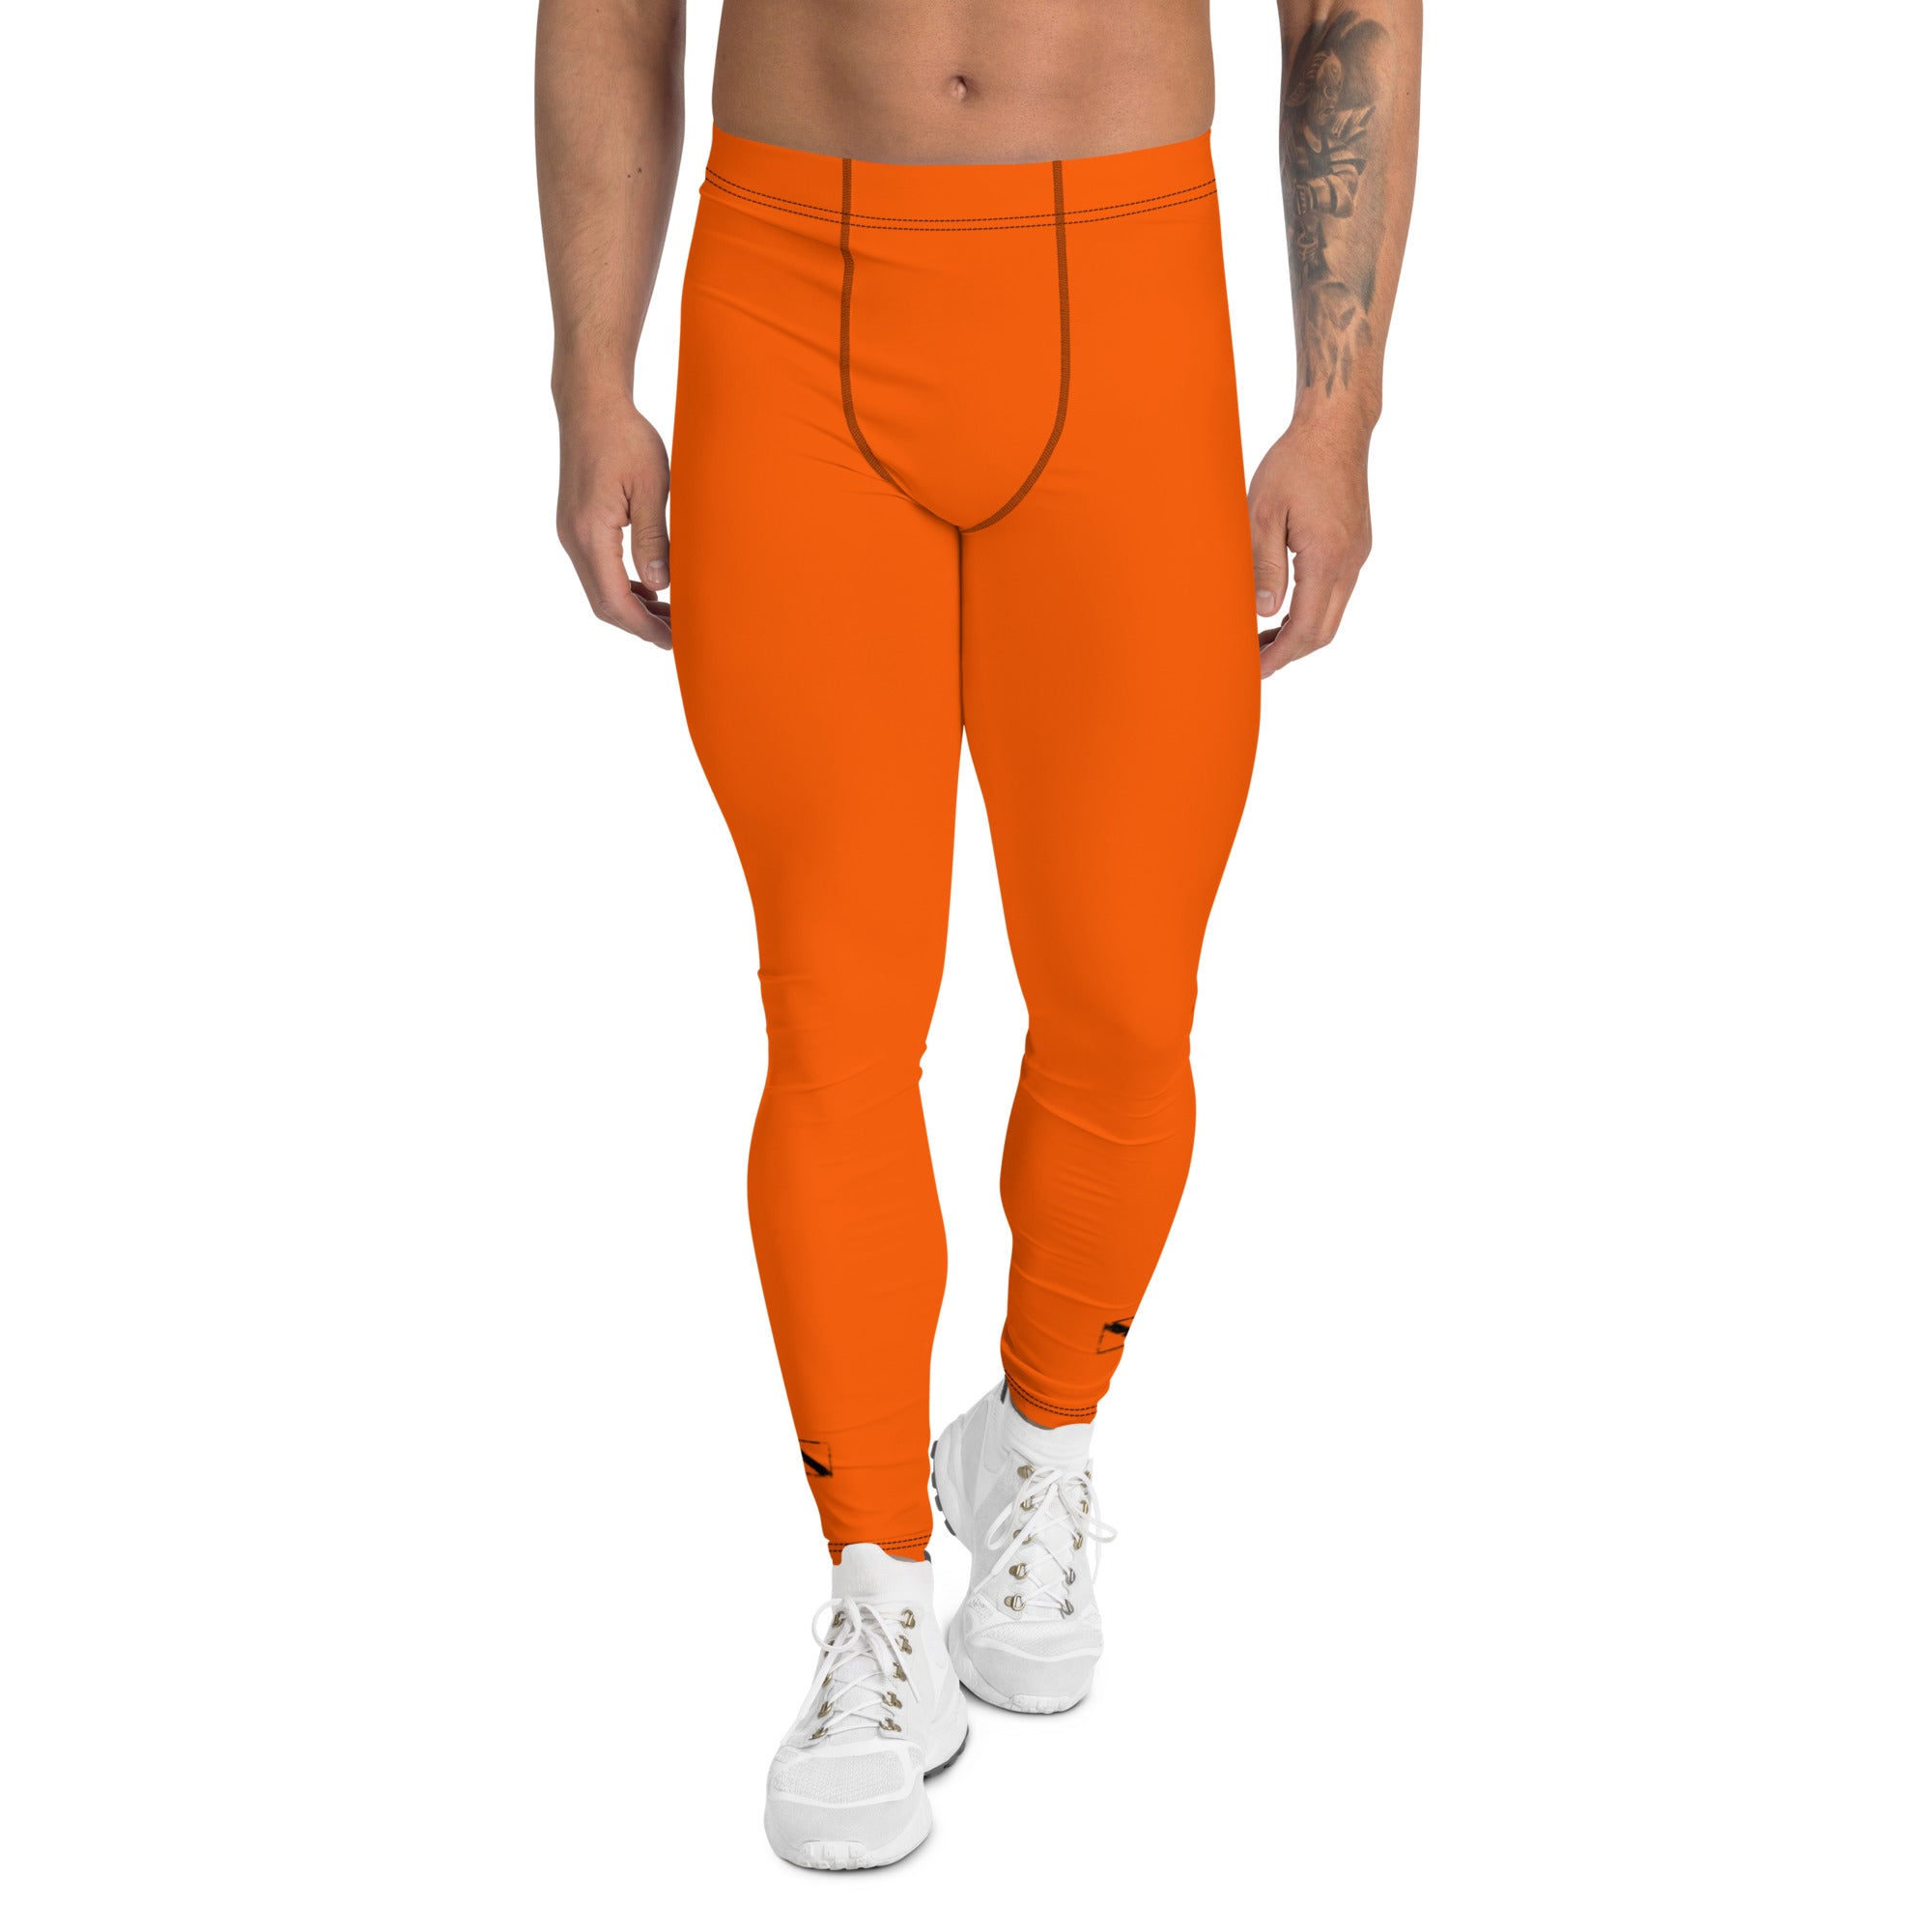 Life League Gear - High Viz Orange - Men's Dive Skin Bottoms